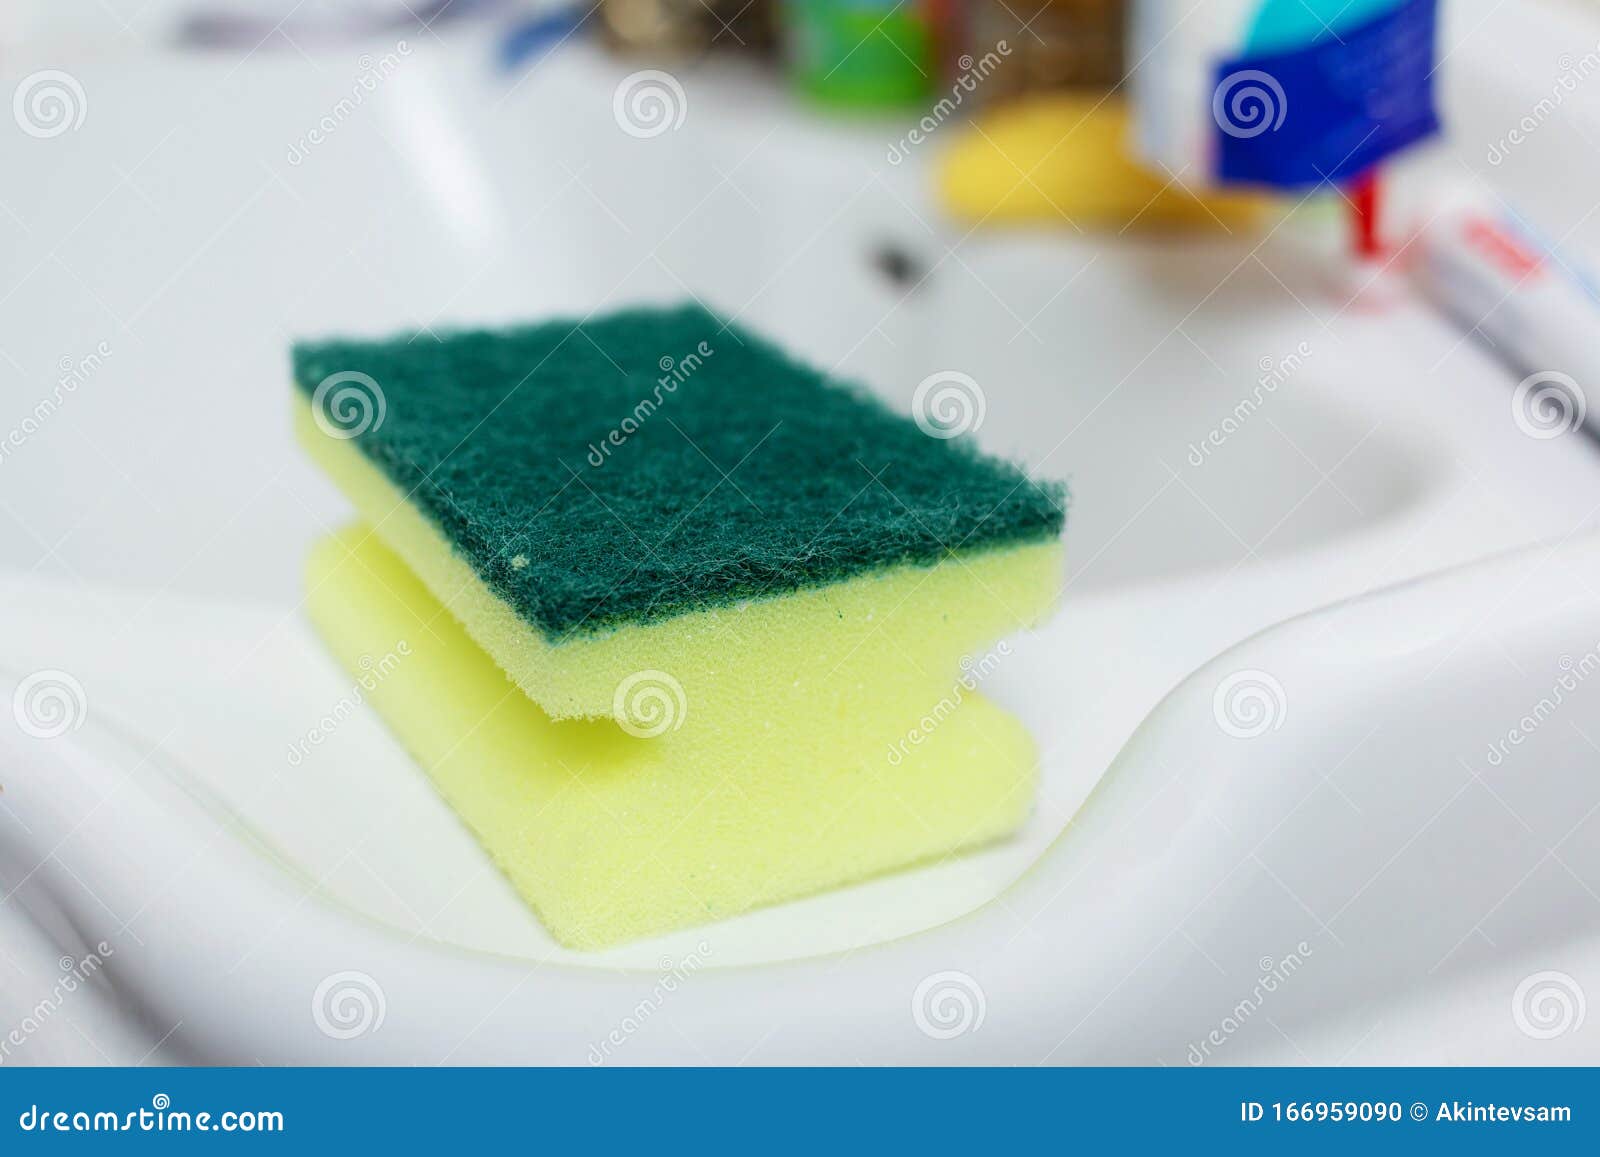 sponge to wipe bathroom sink